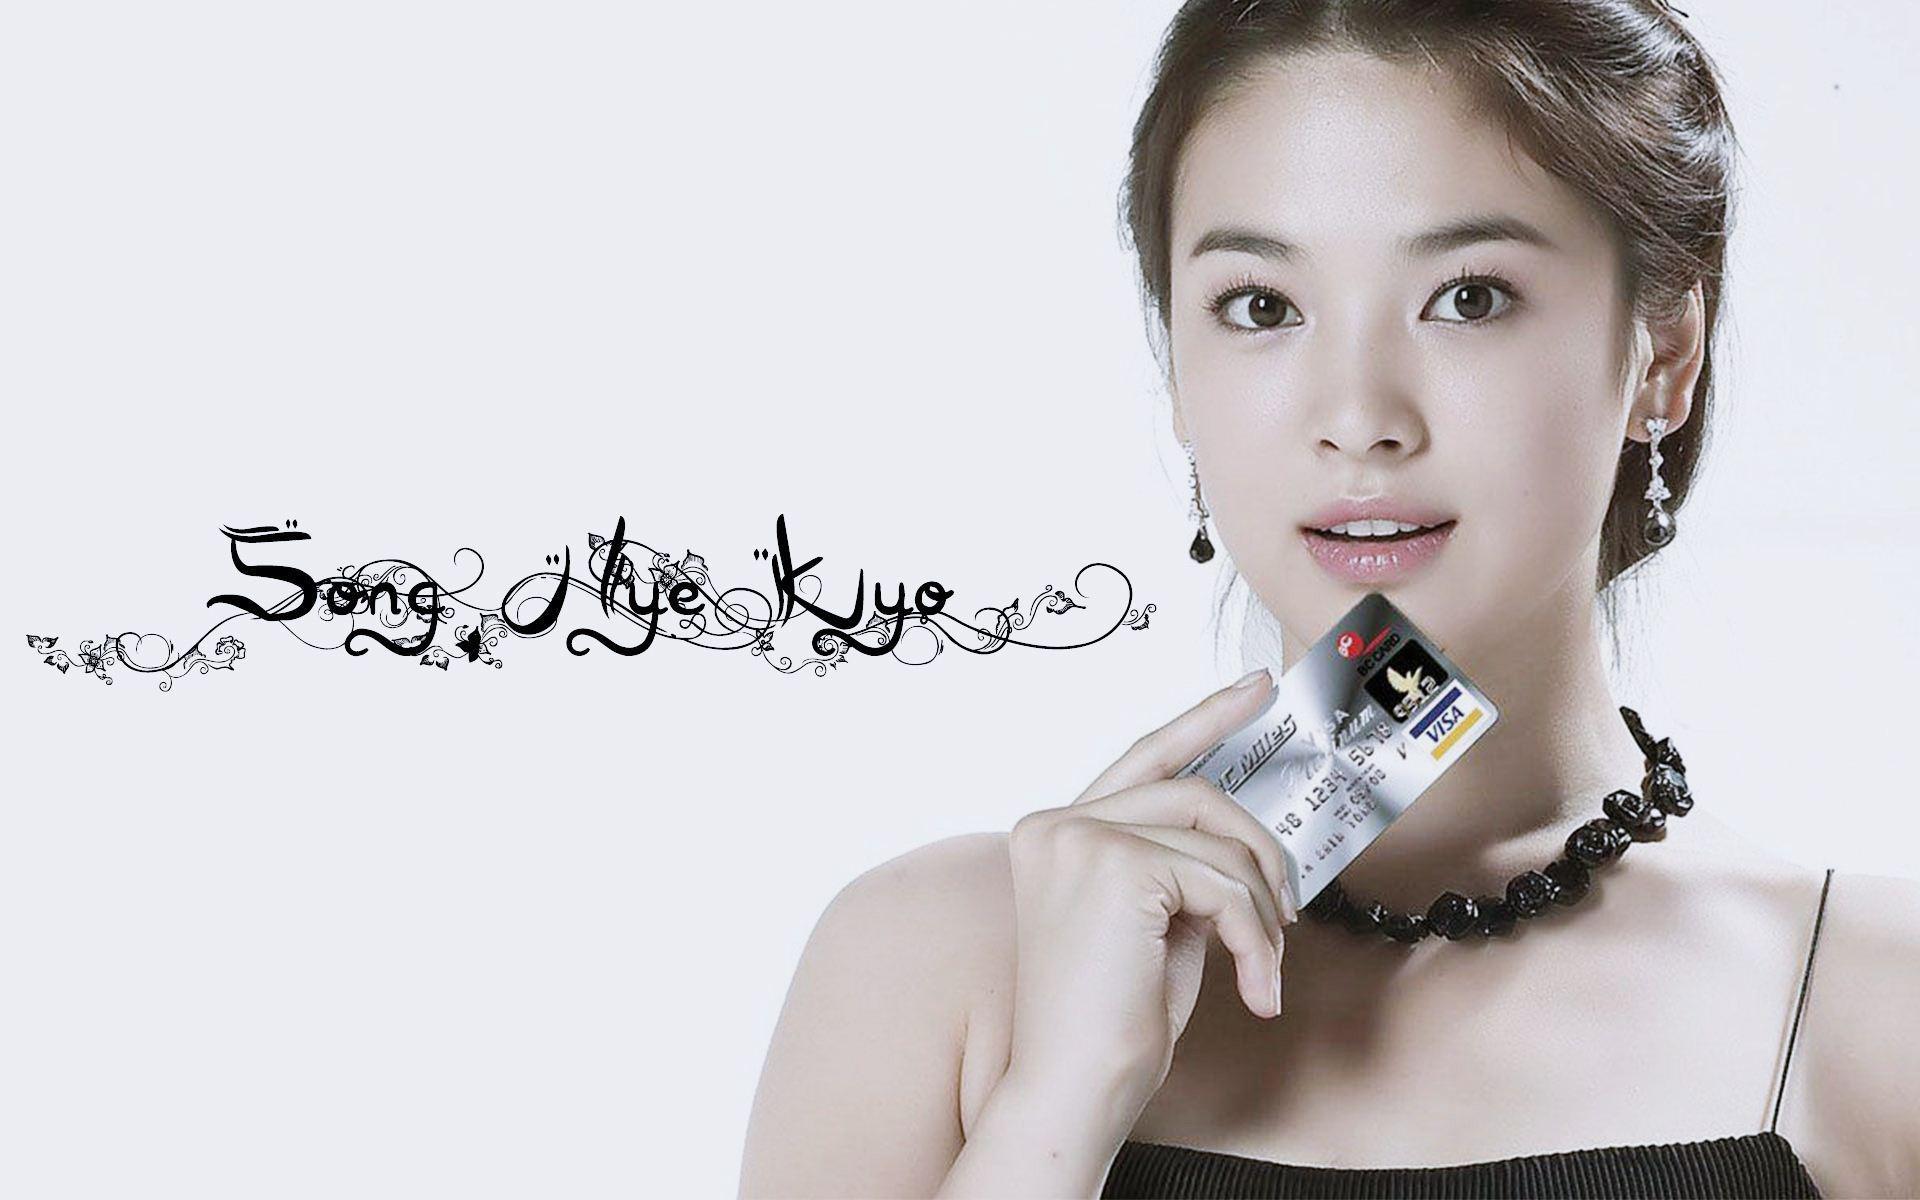 Song Hye Kyo Actress HD desktop wallpaper, Widescreen, High